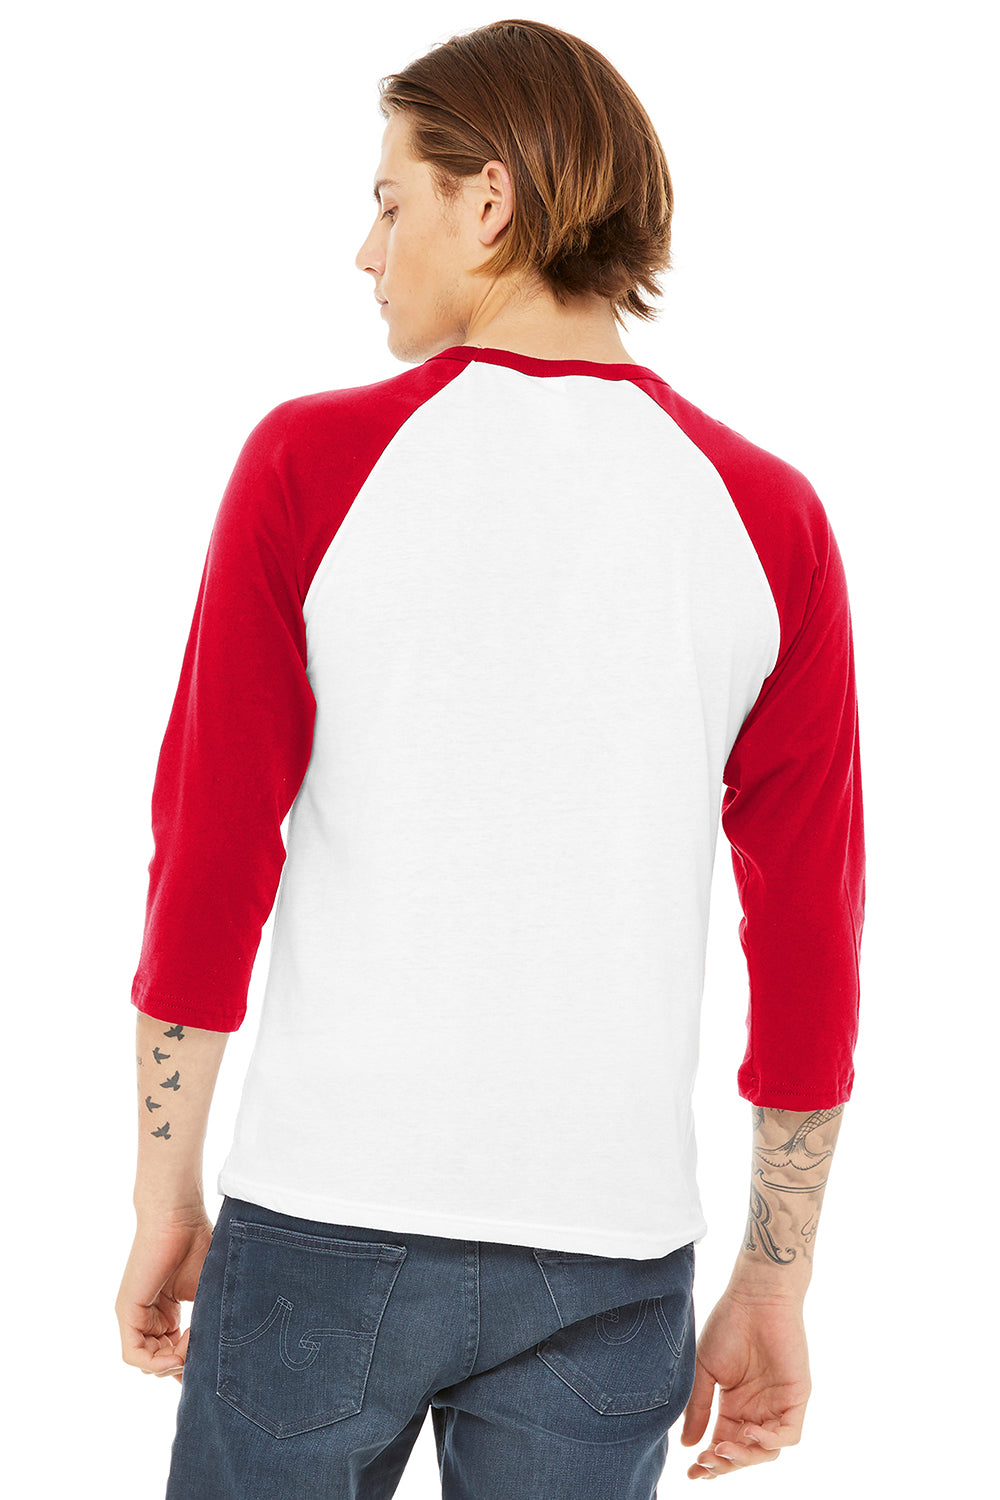 Bella + Canvas BC3200/3200 Mens 3/4 Sleeve Crewneck T-Shirt White/Red Model Back